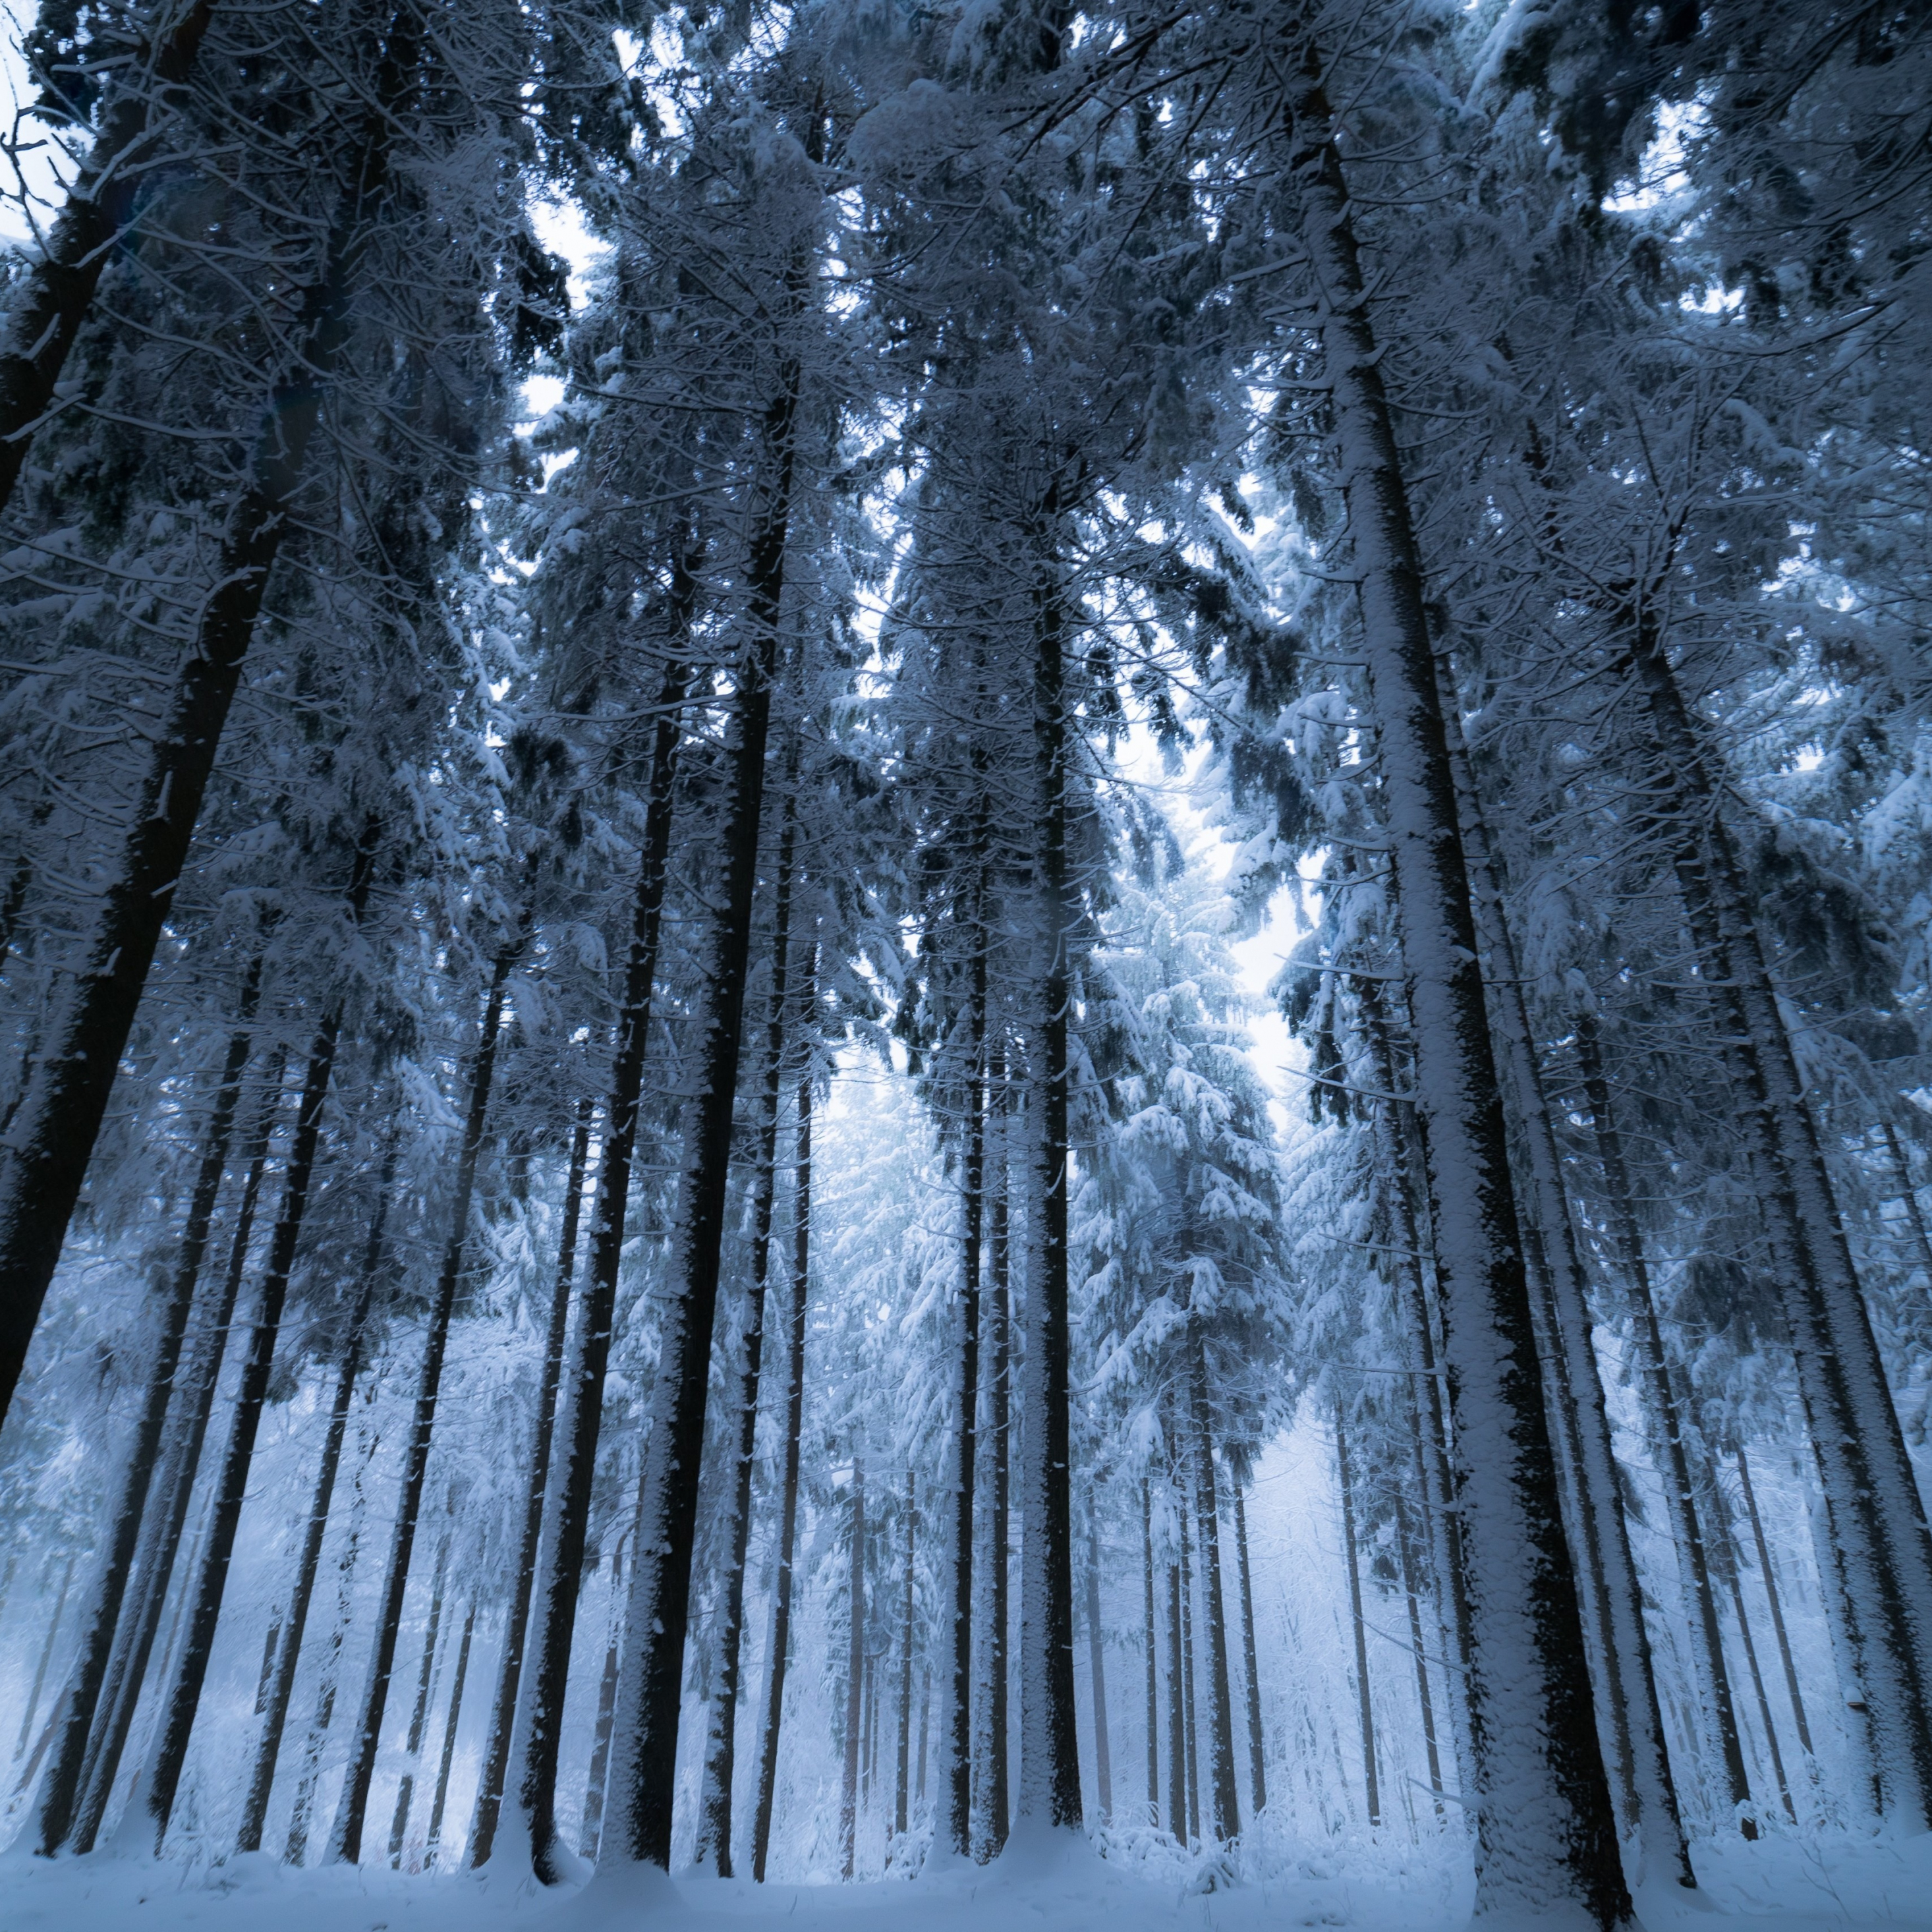 Download 2932x2932 wallpaper trees, forest, winter, ipad pro retina, 2932x2932 HD image, background, 1710